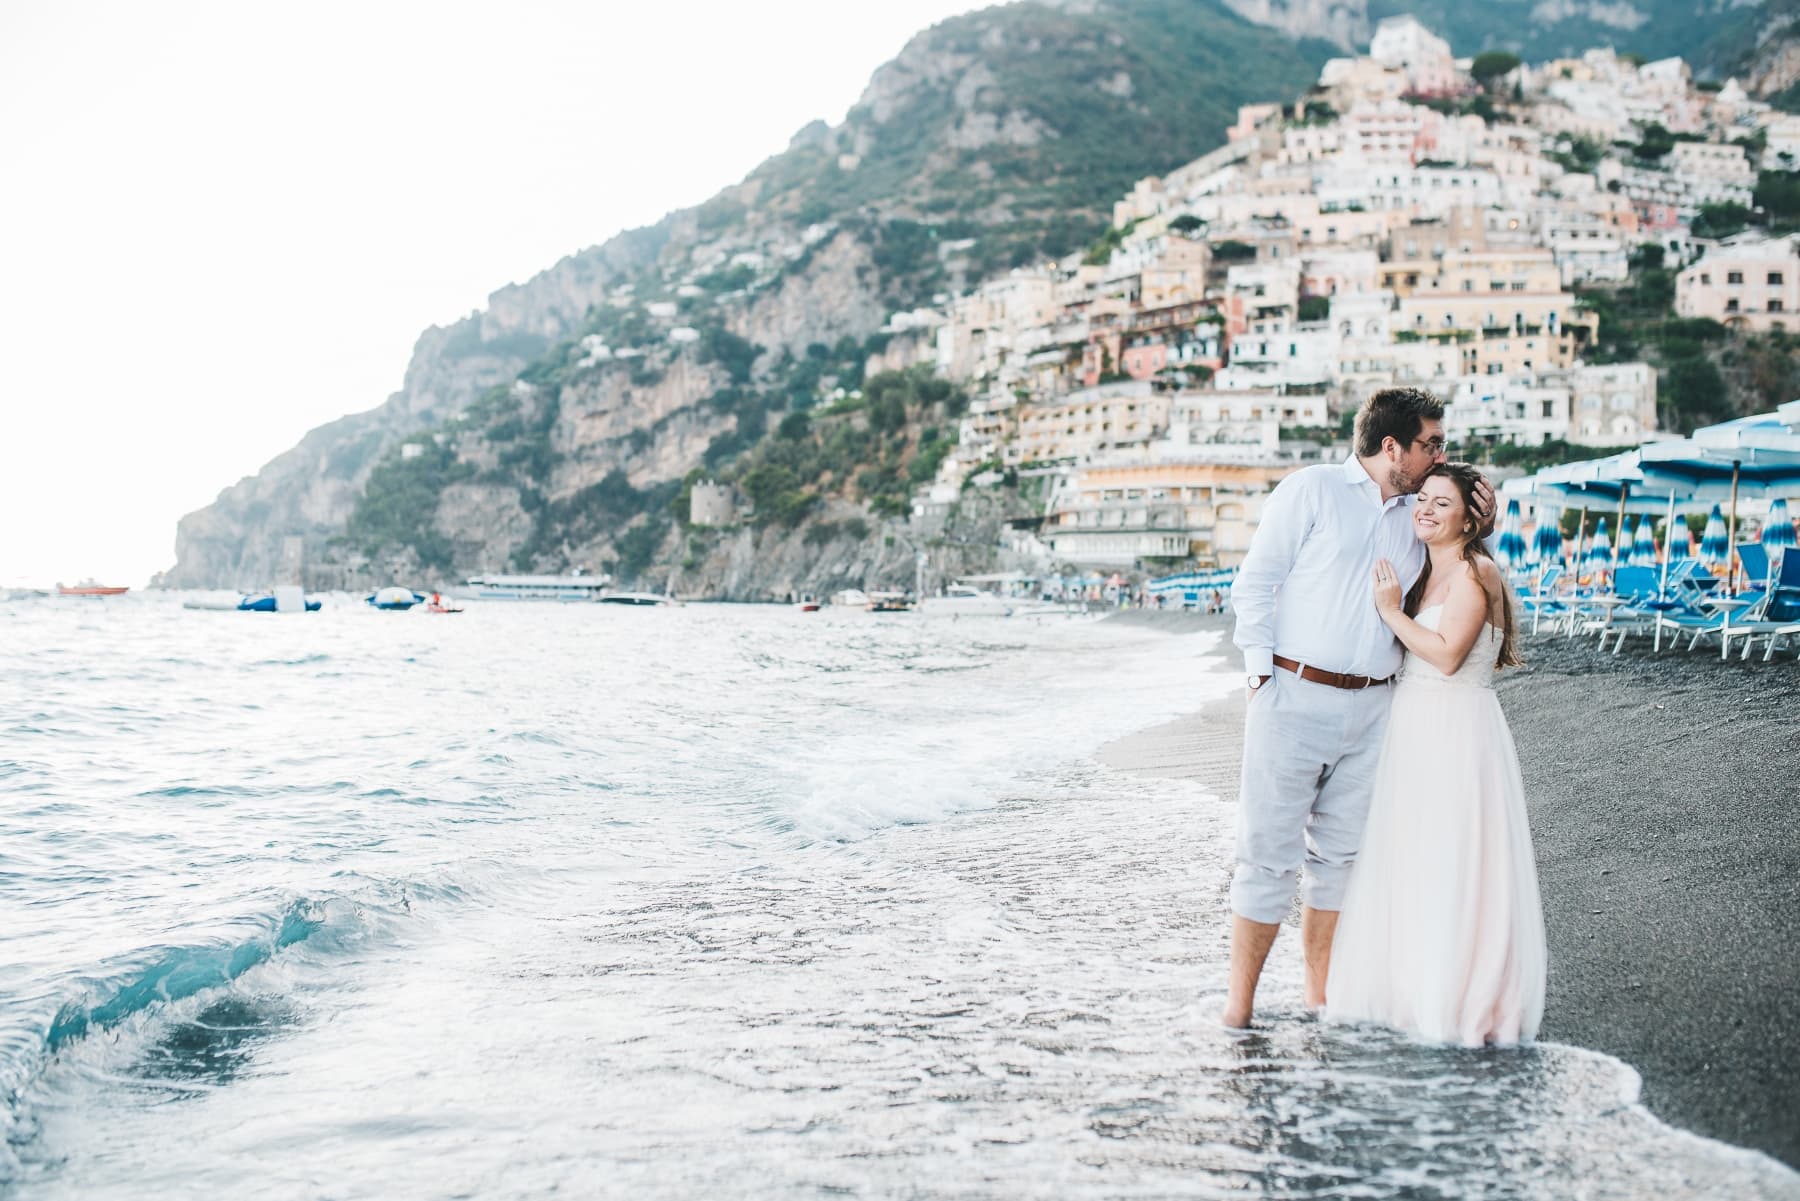 A Romantic Elopement Wedding in Positano, Italy - Destination Wedding  Details